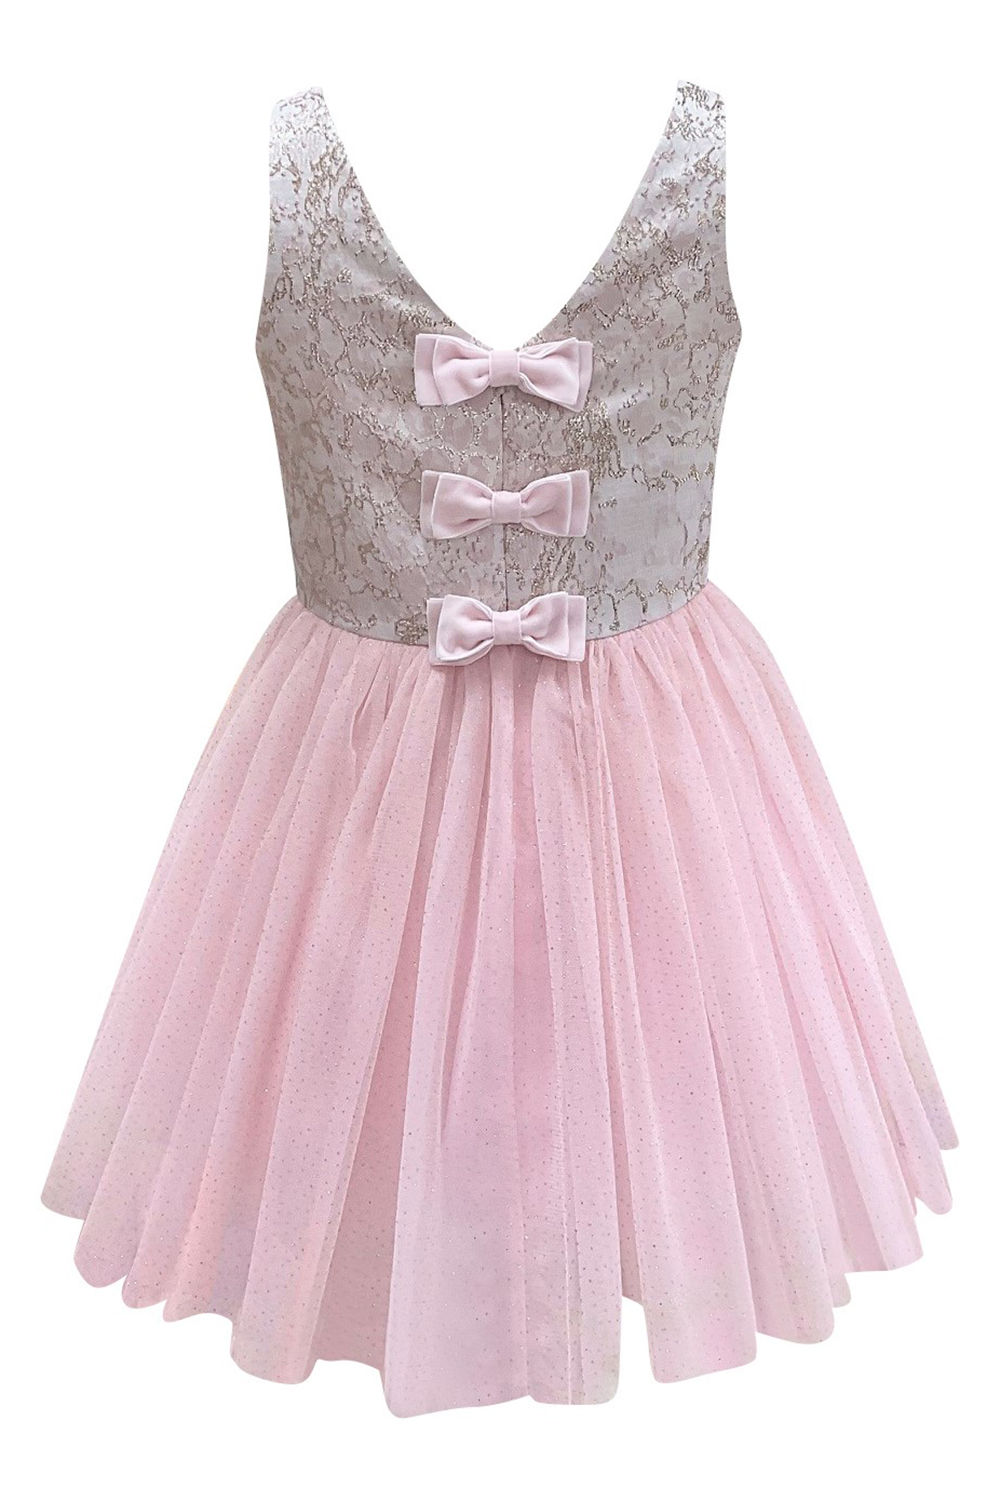 Pastel Pink Princess Gown